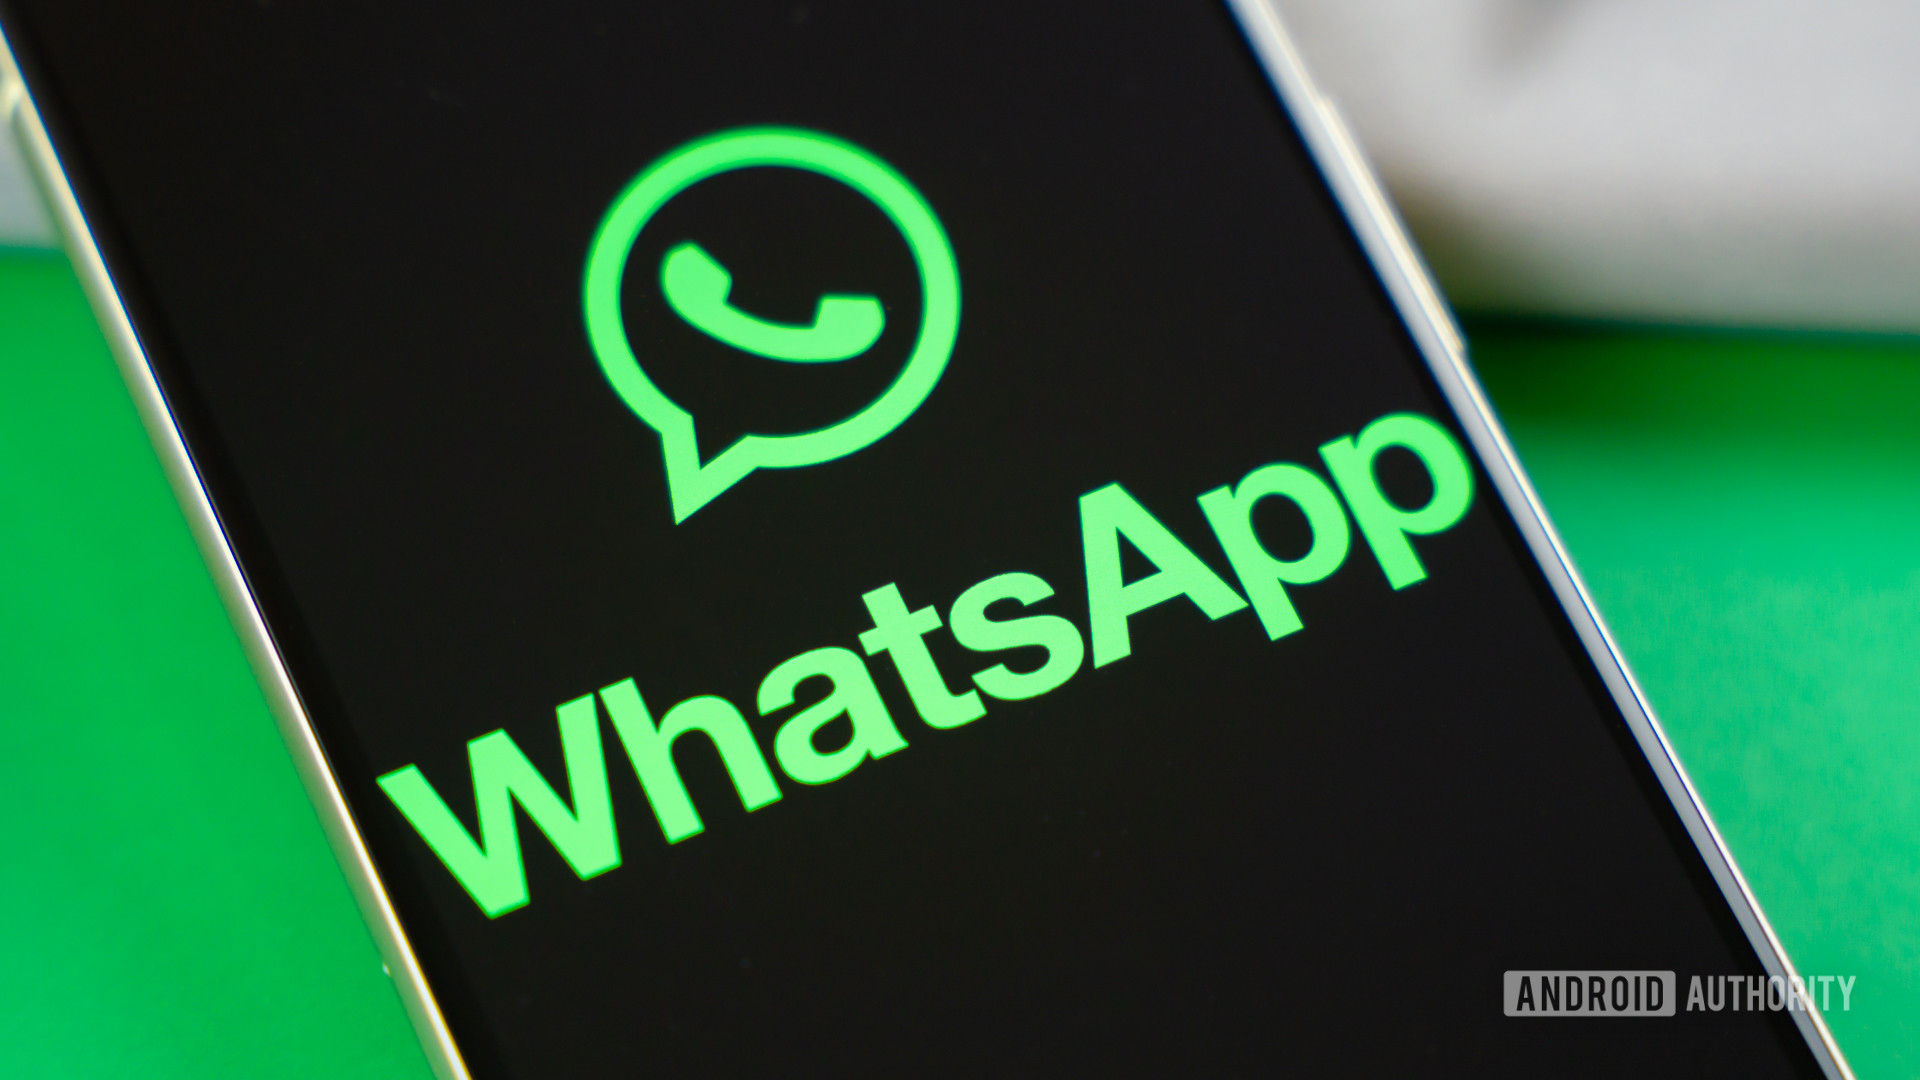 WhatsApp logo on smartphone next to everyday accessories Stock photo 2